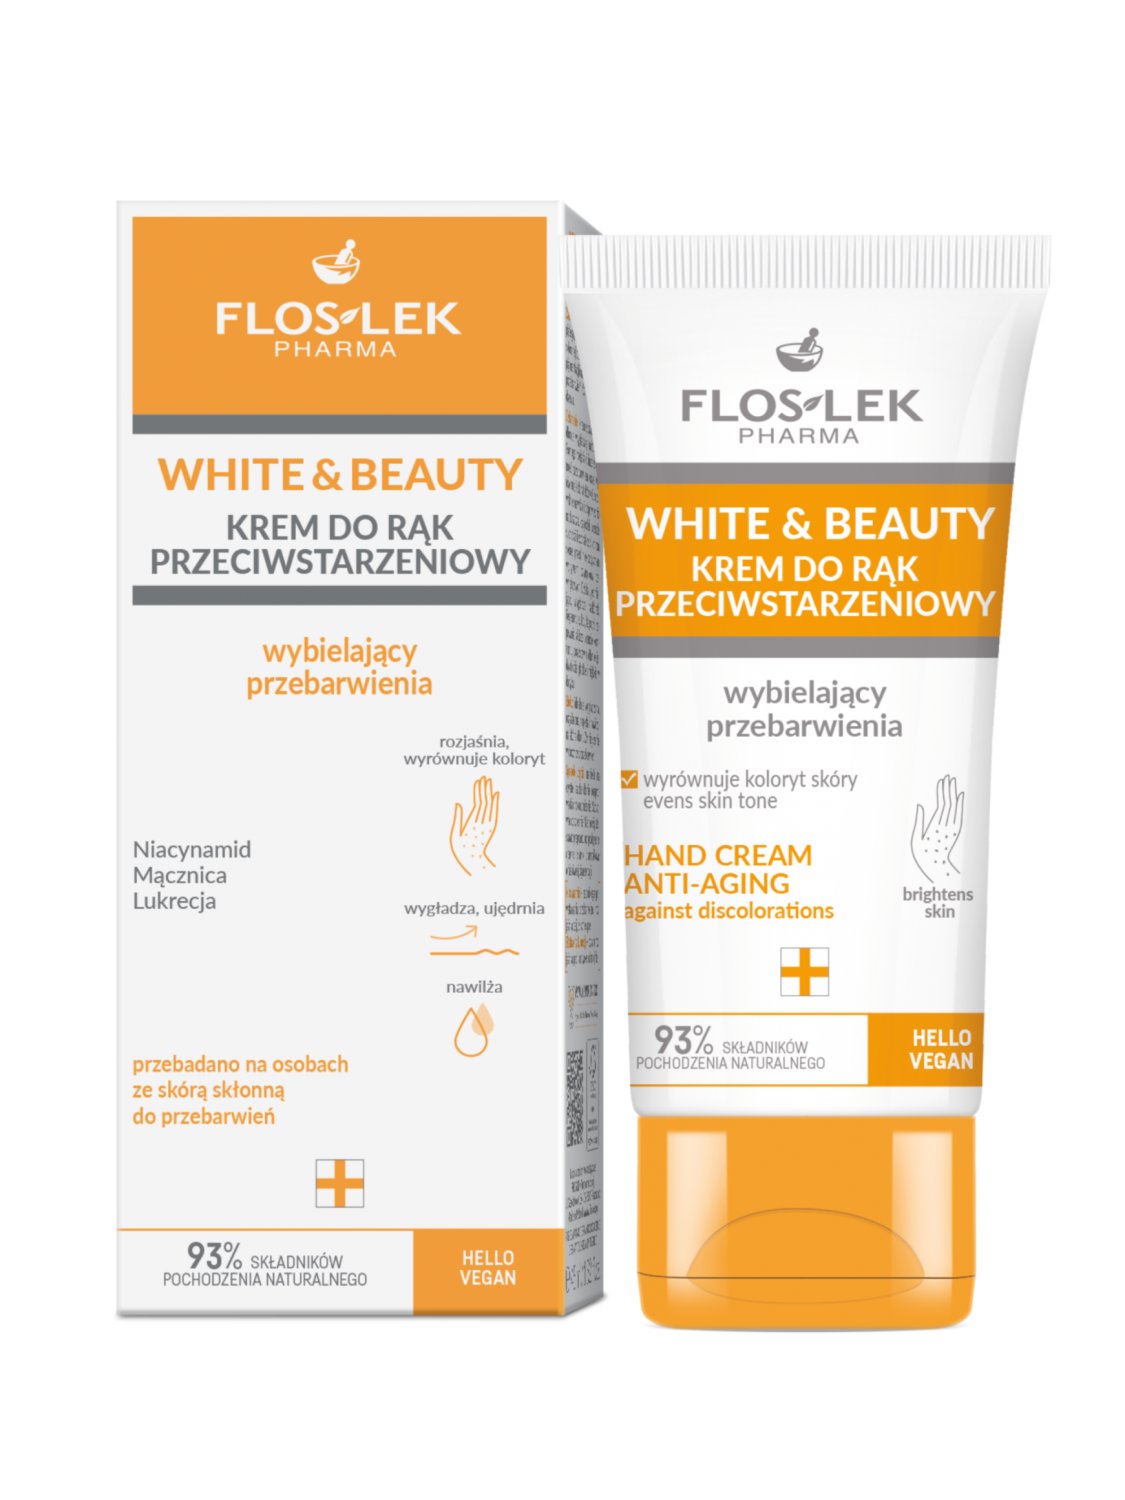 WHITE & BEAUTY Hand cream anti-aging against discolorations 45 ml - Floslek